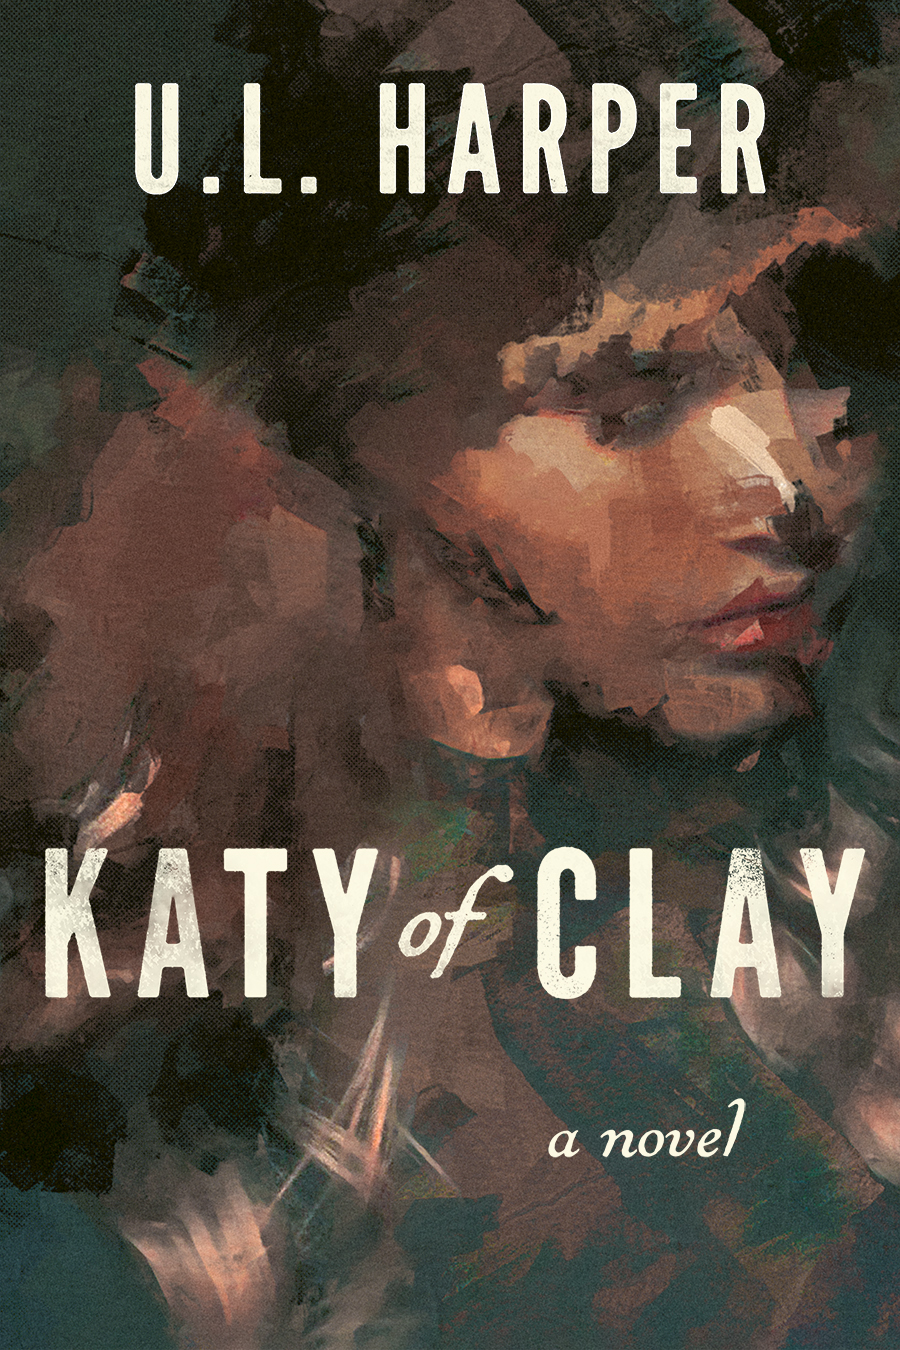 Katy of Clay by U.L. Harper